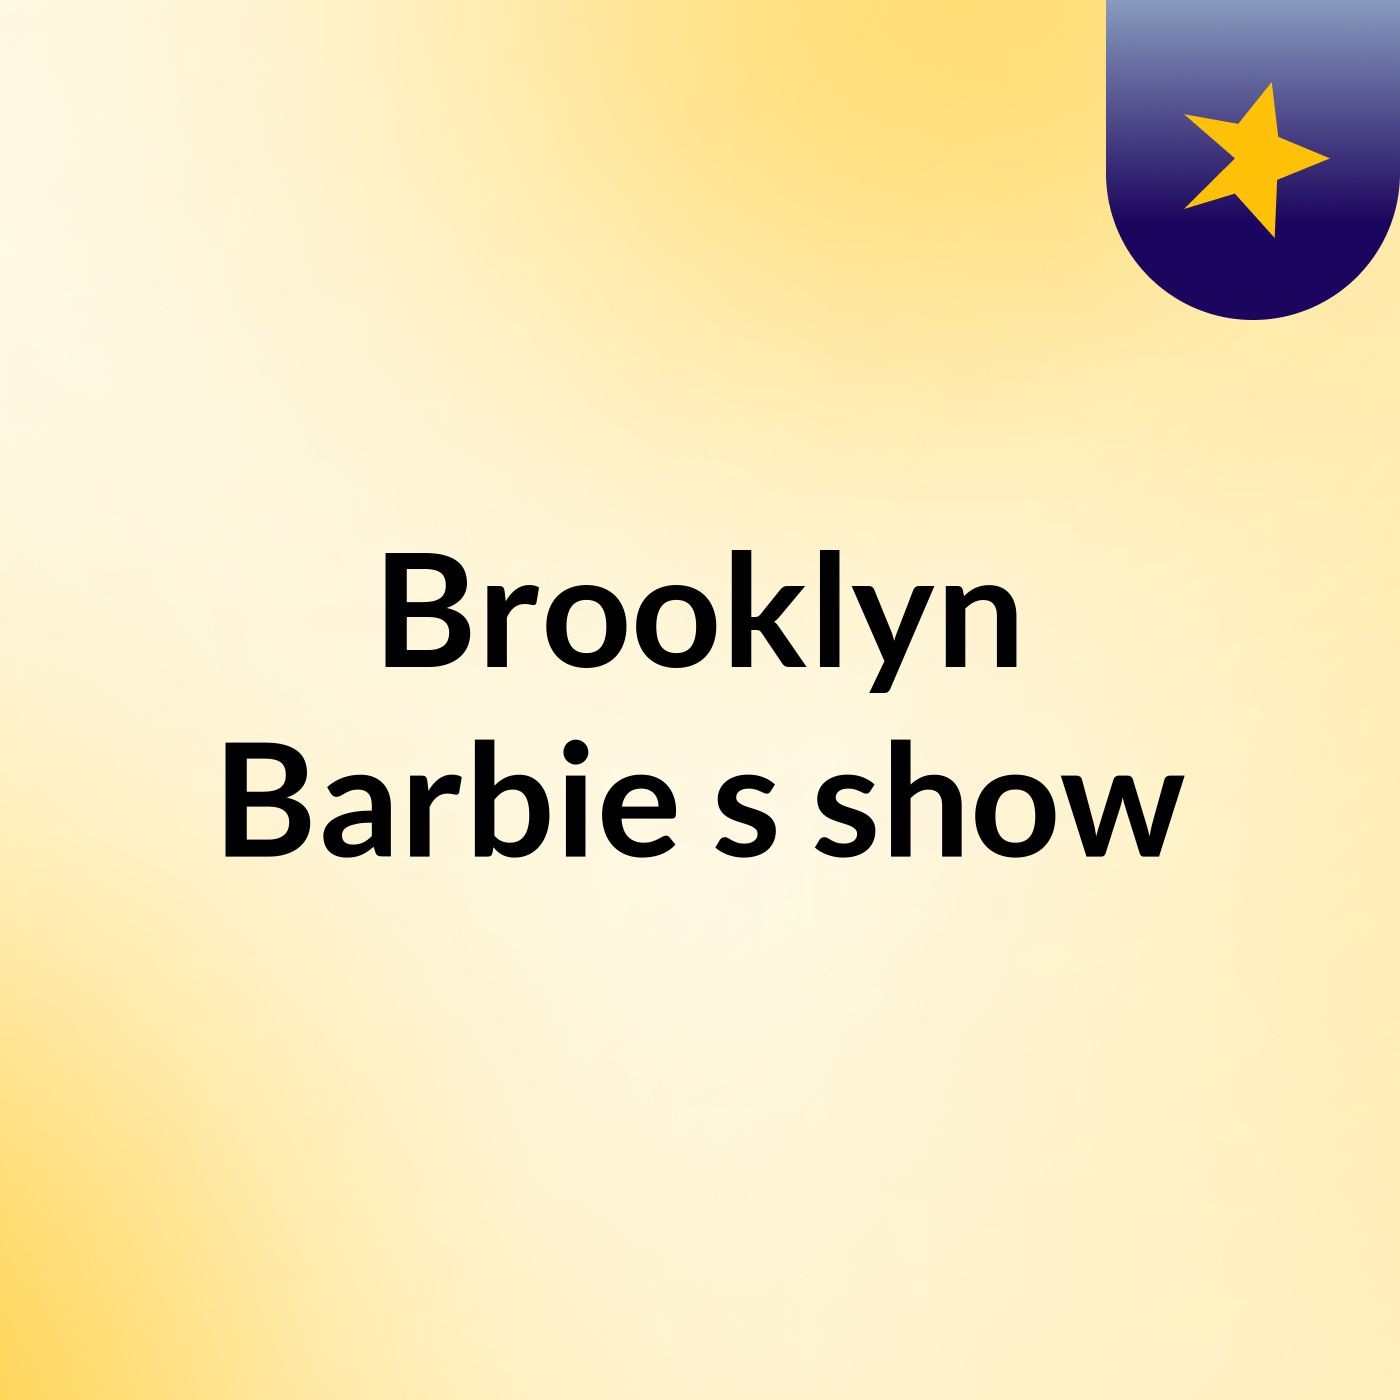 Brooklyn Barbie's show